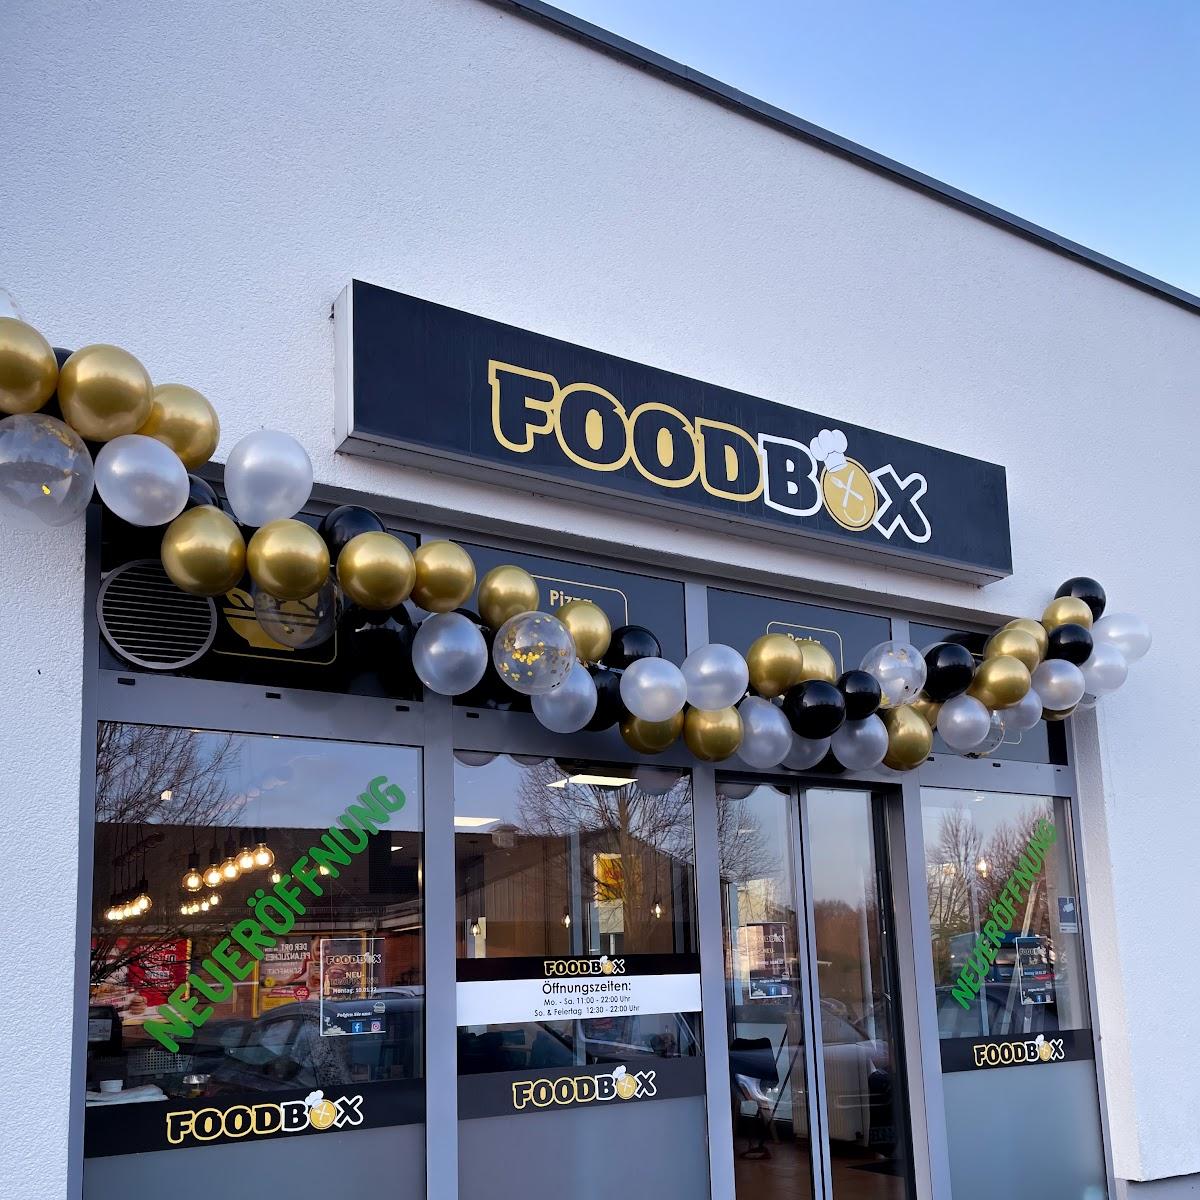 Restaurant "Foodbox" in Niederkassel